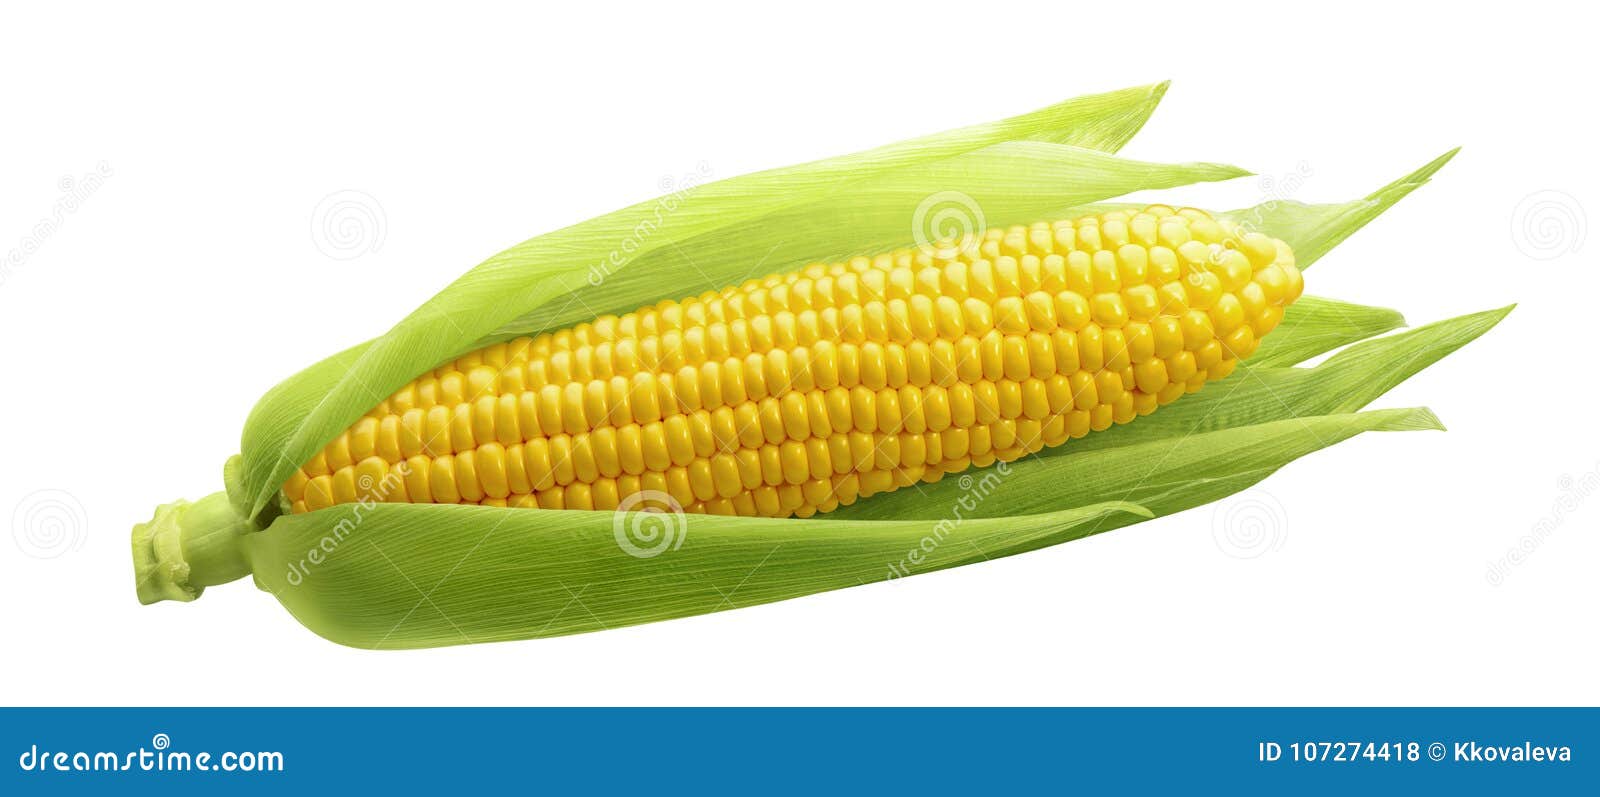 single ear of corn  on white background